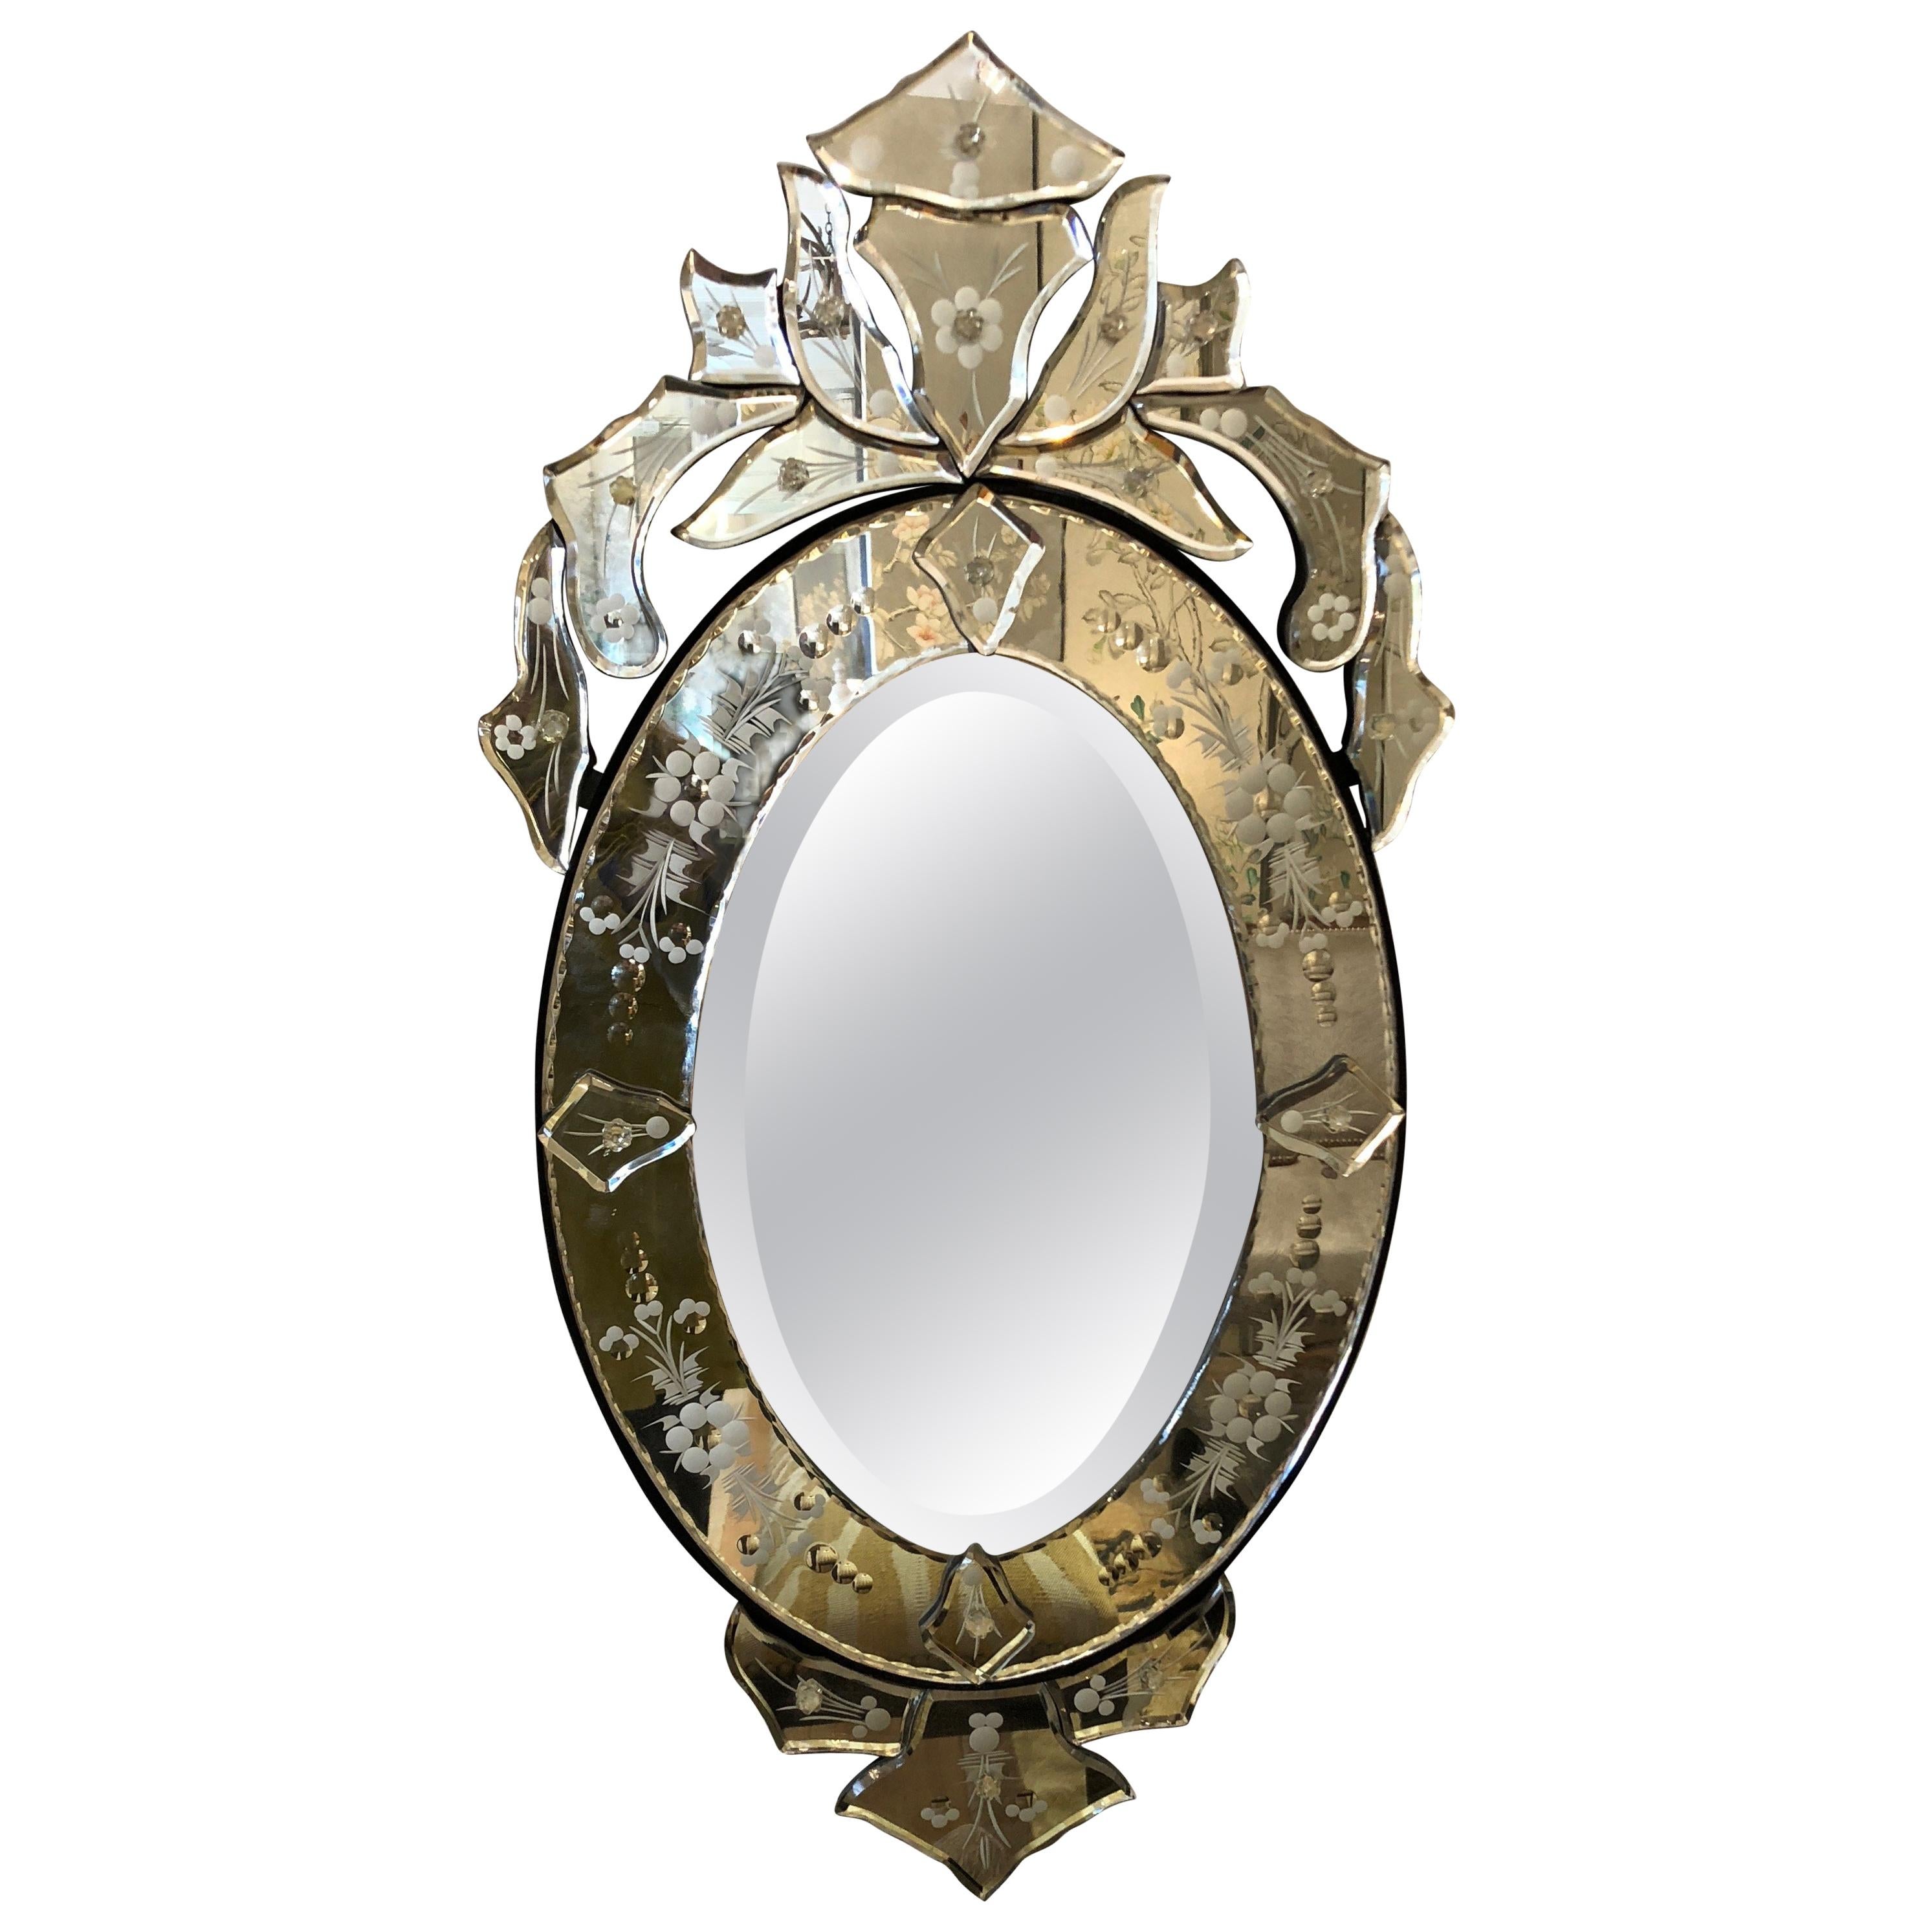 Small Sized Oval Venetian Mirror with Big Glitz Factor